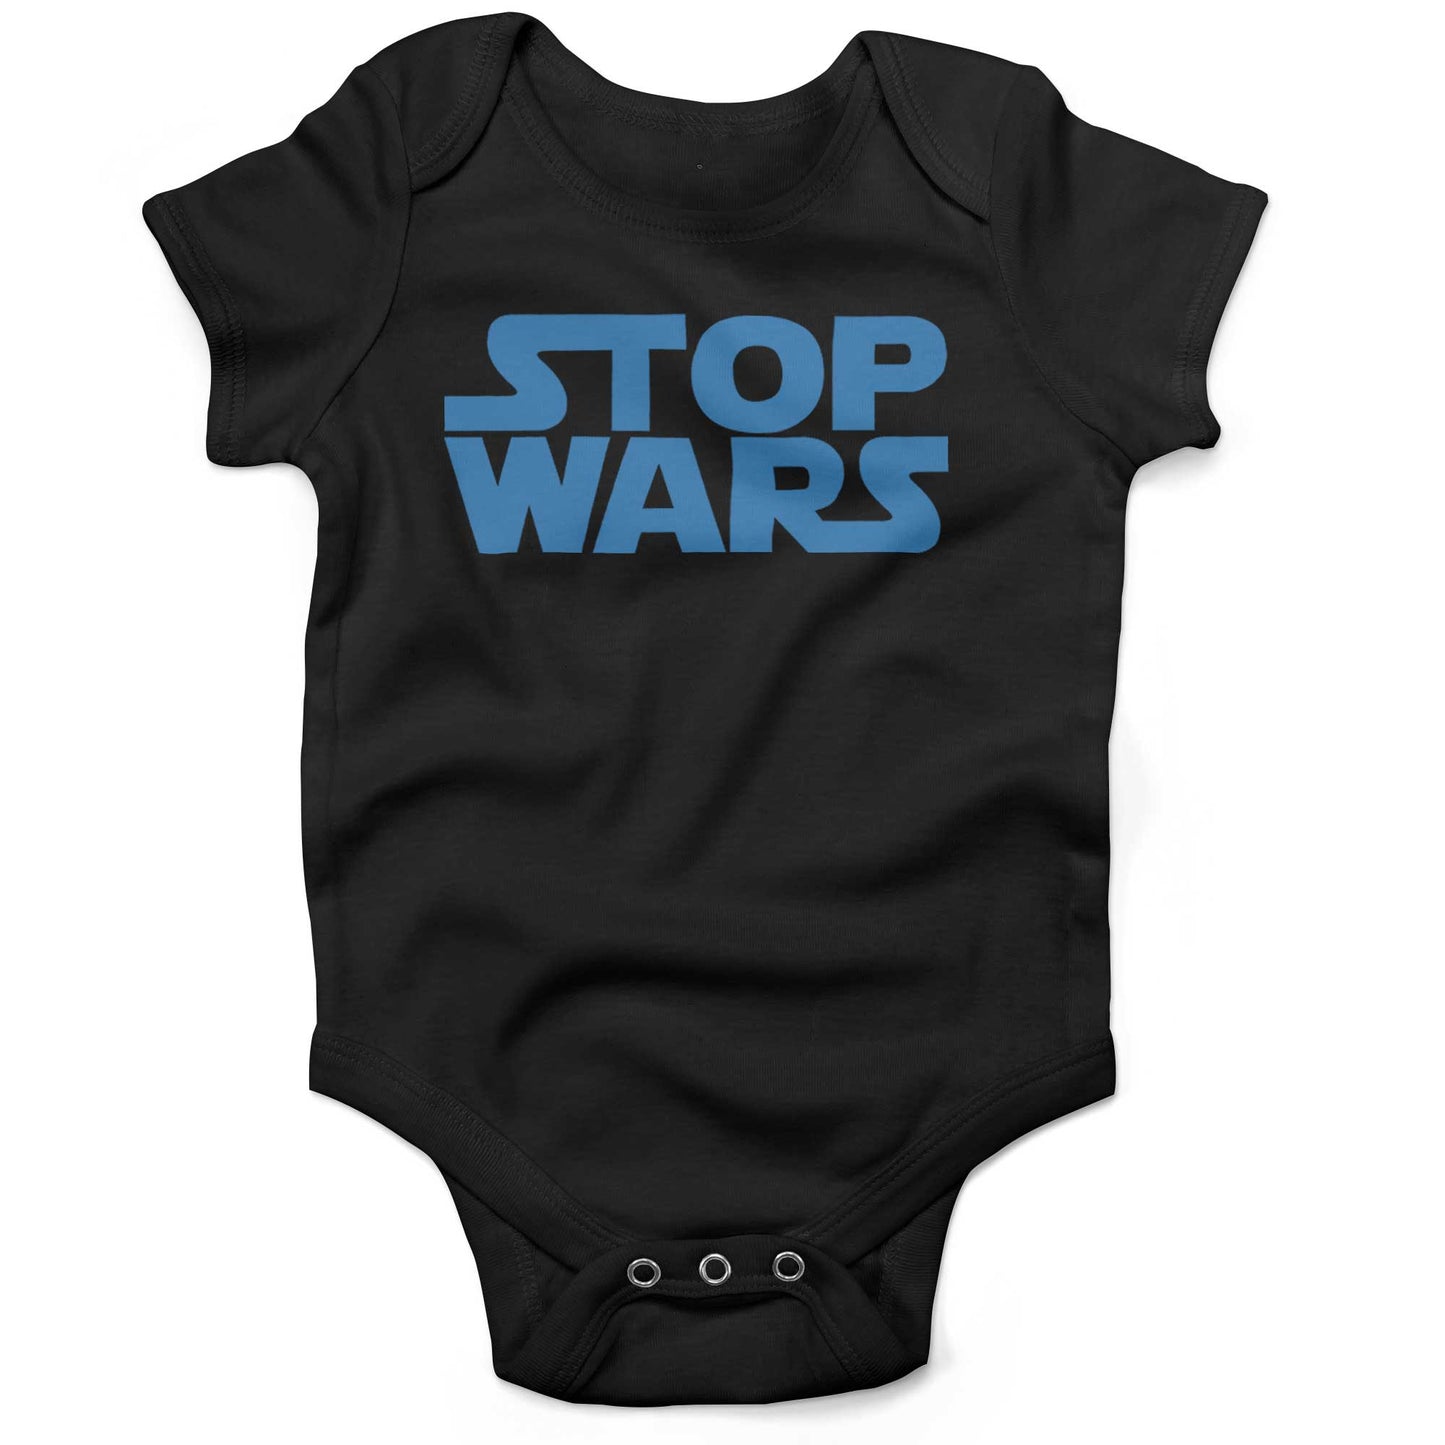 STOP WARS Infant Bodysuit or Raglan Baby Tee-